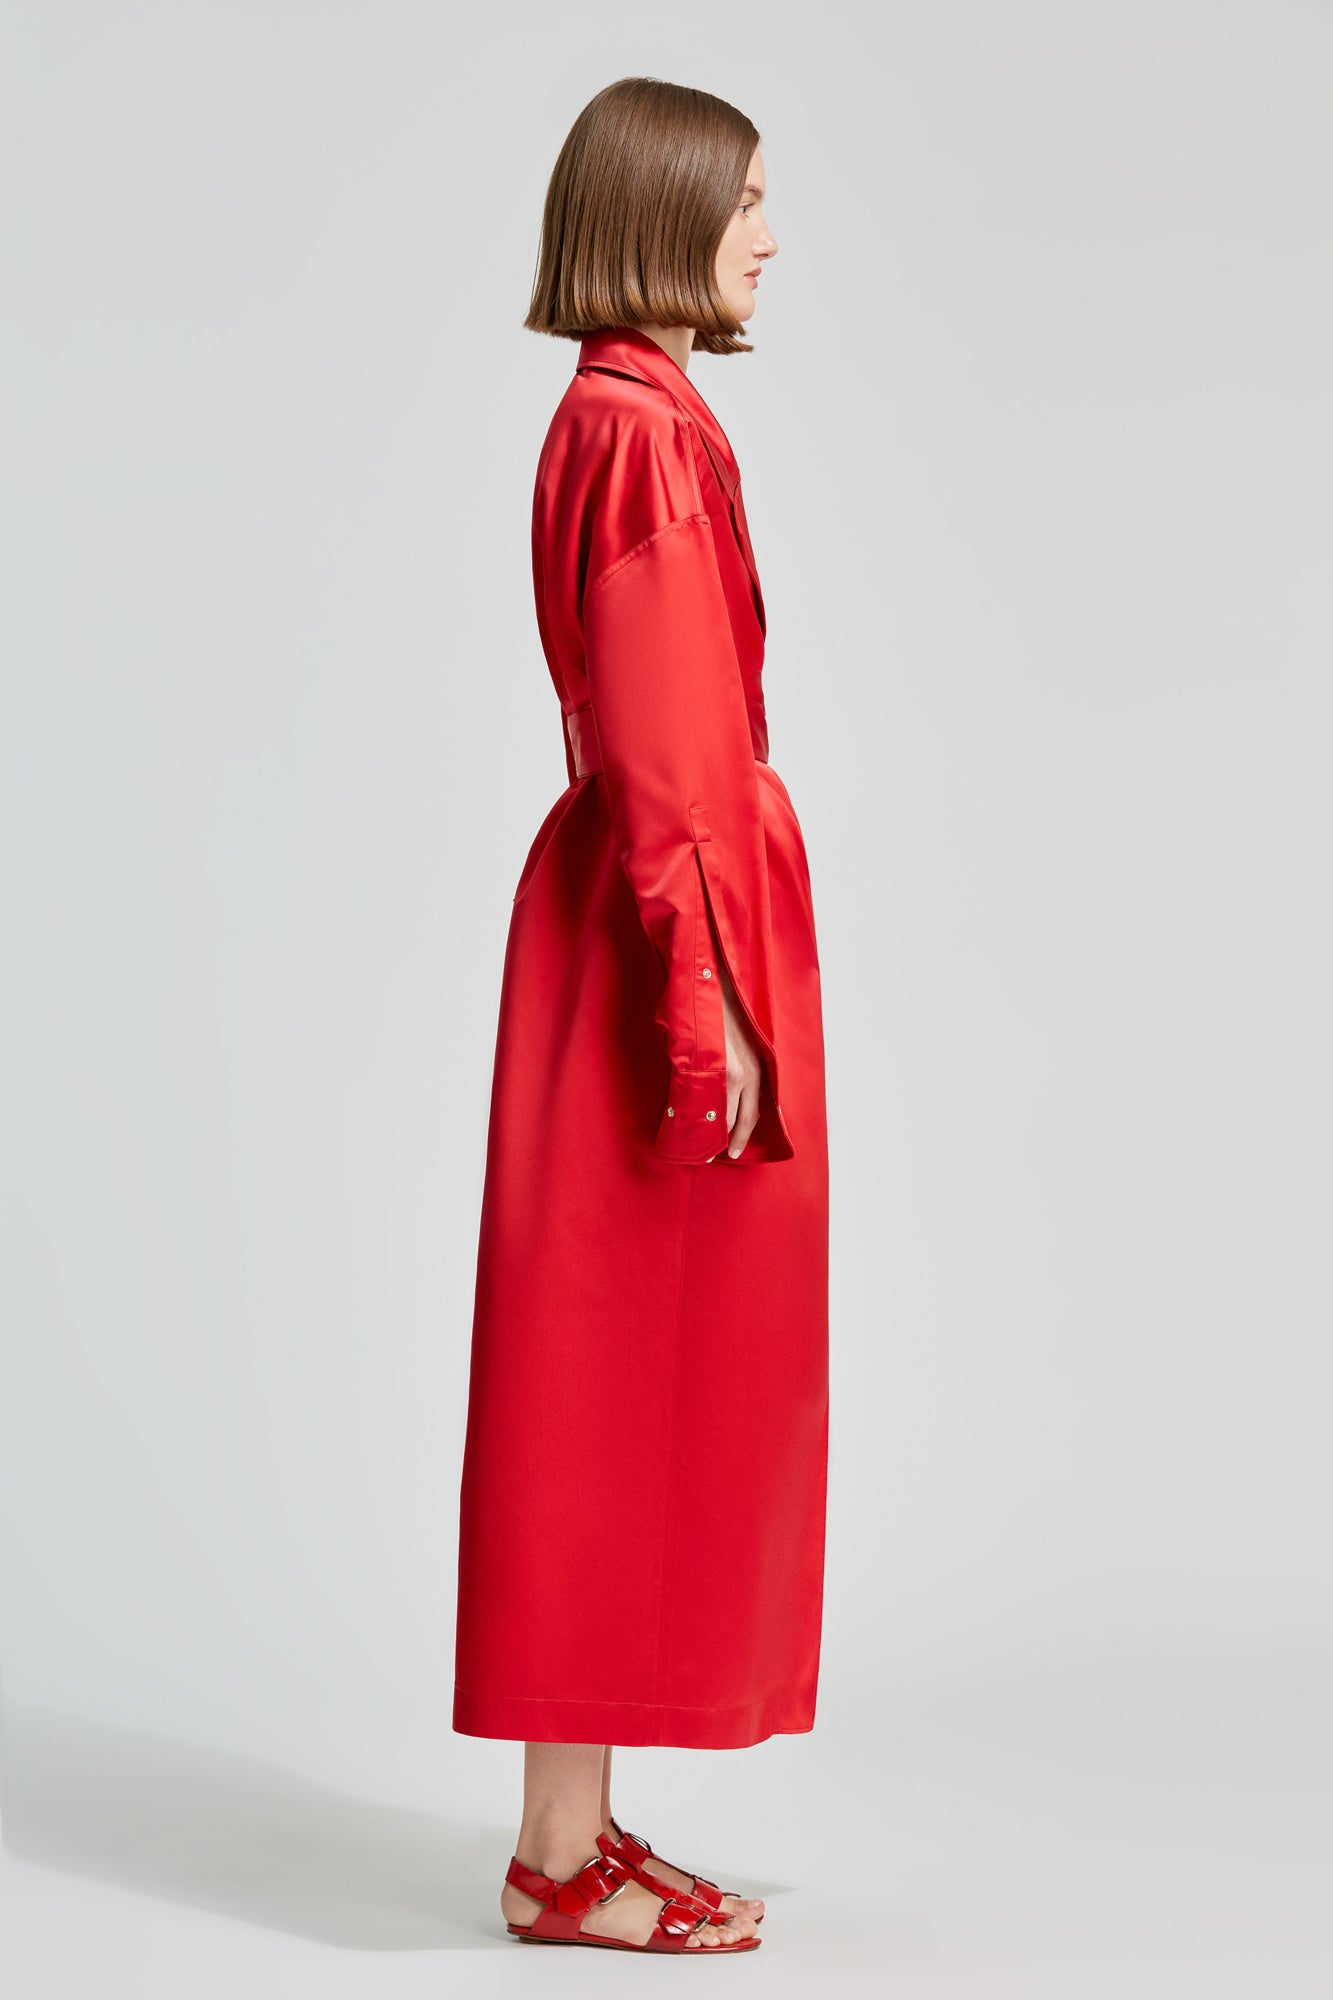 Valentina silk duchesse trench coat